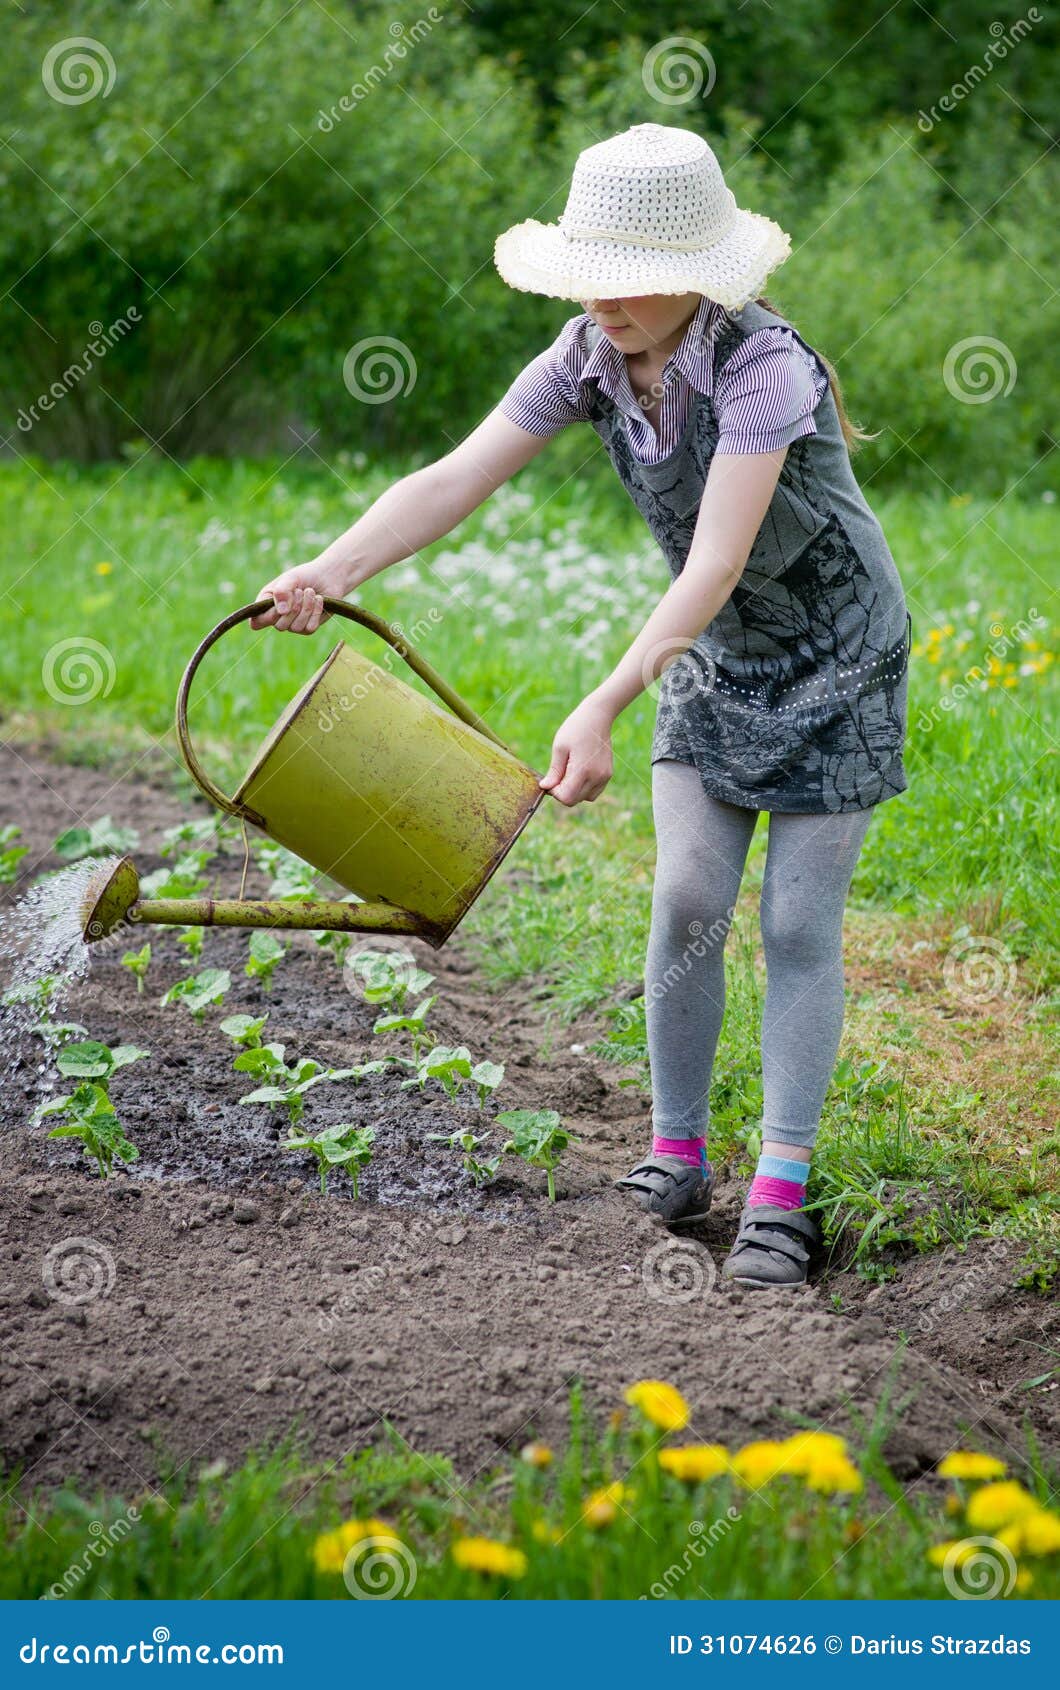 girl helps pours garden